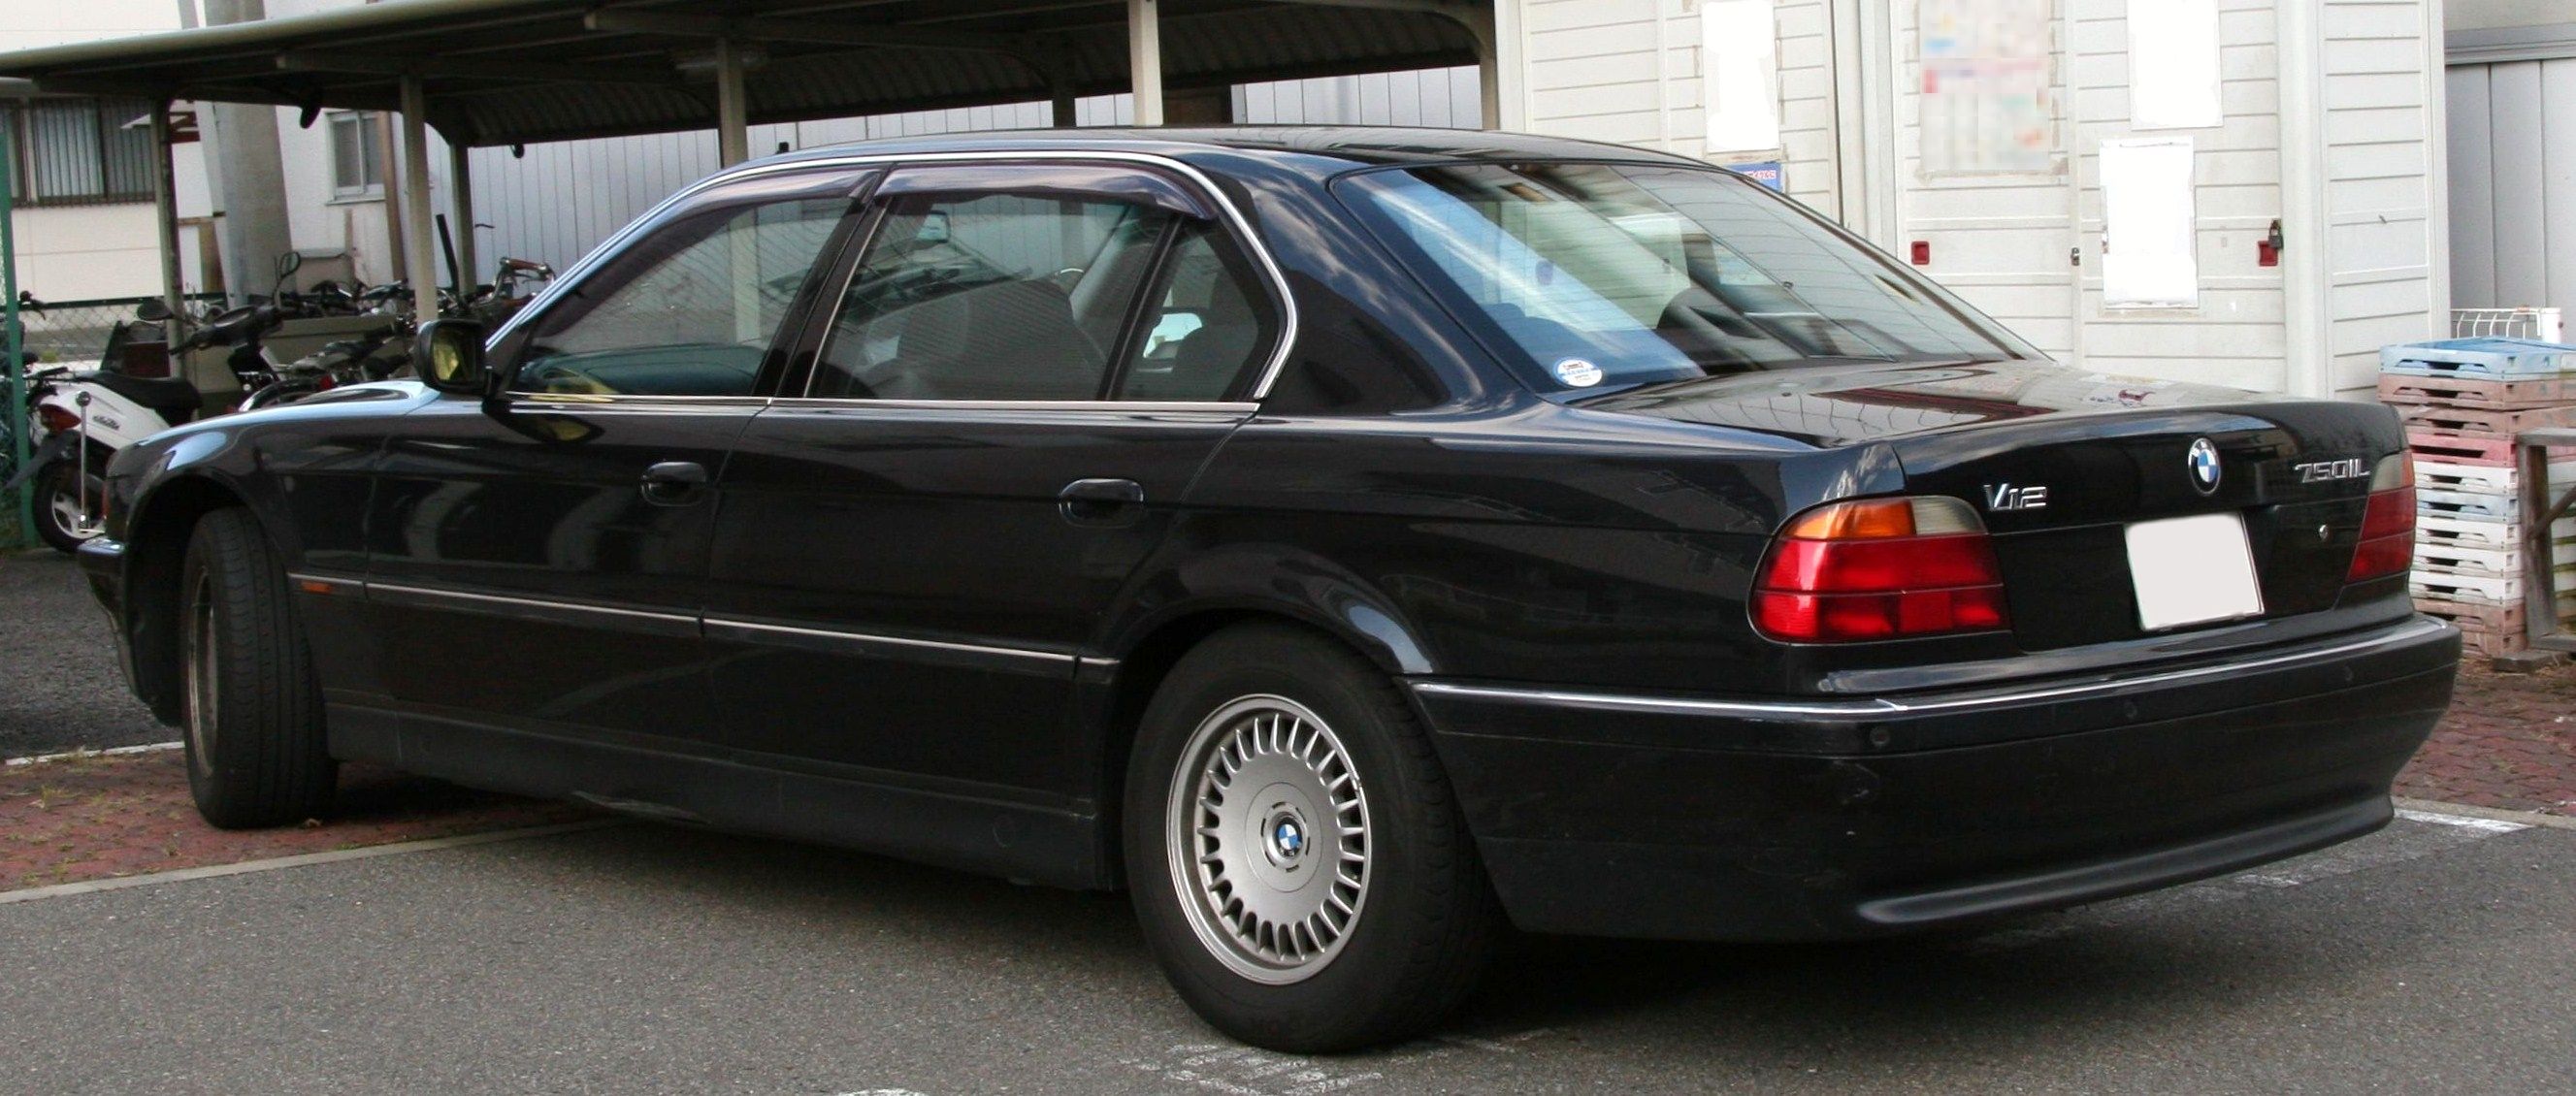 File:BMW 750iL rear.jpg - Wikimedia Commons